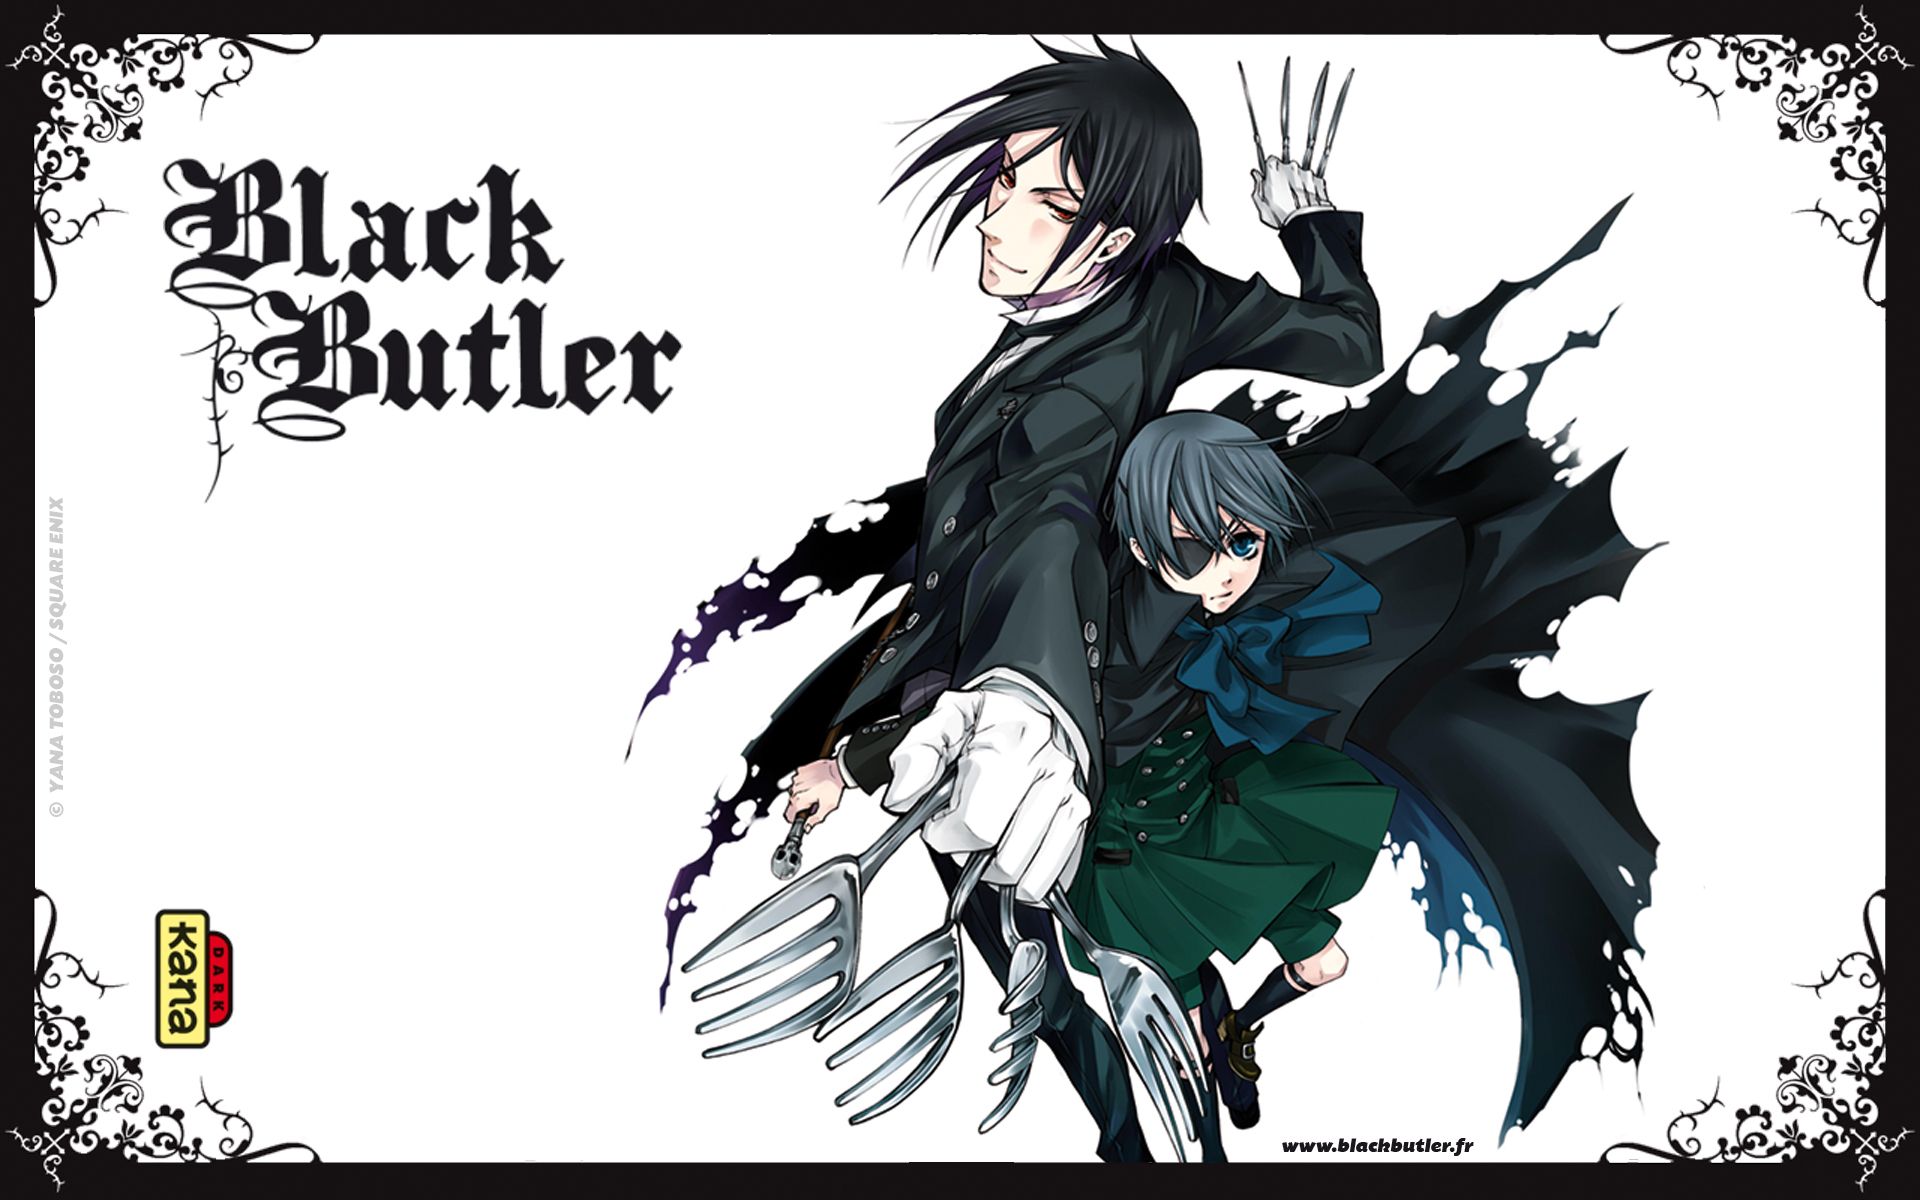 10. "Kuroshitsuji (Black Butler)" - wide 4